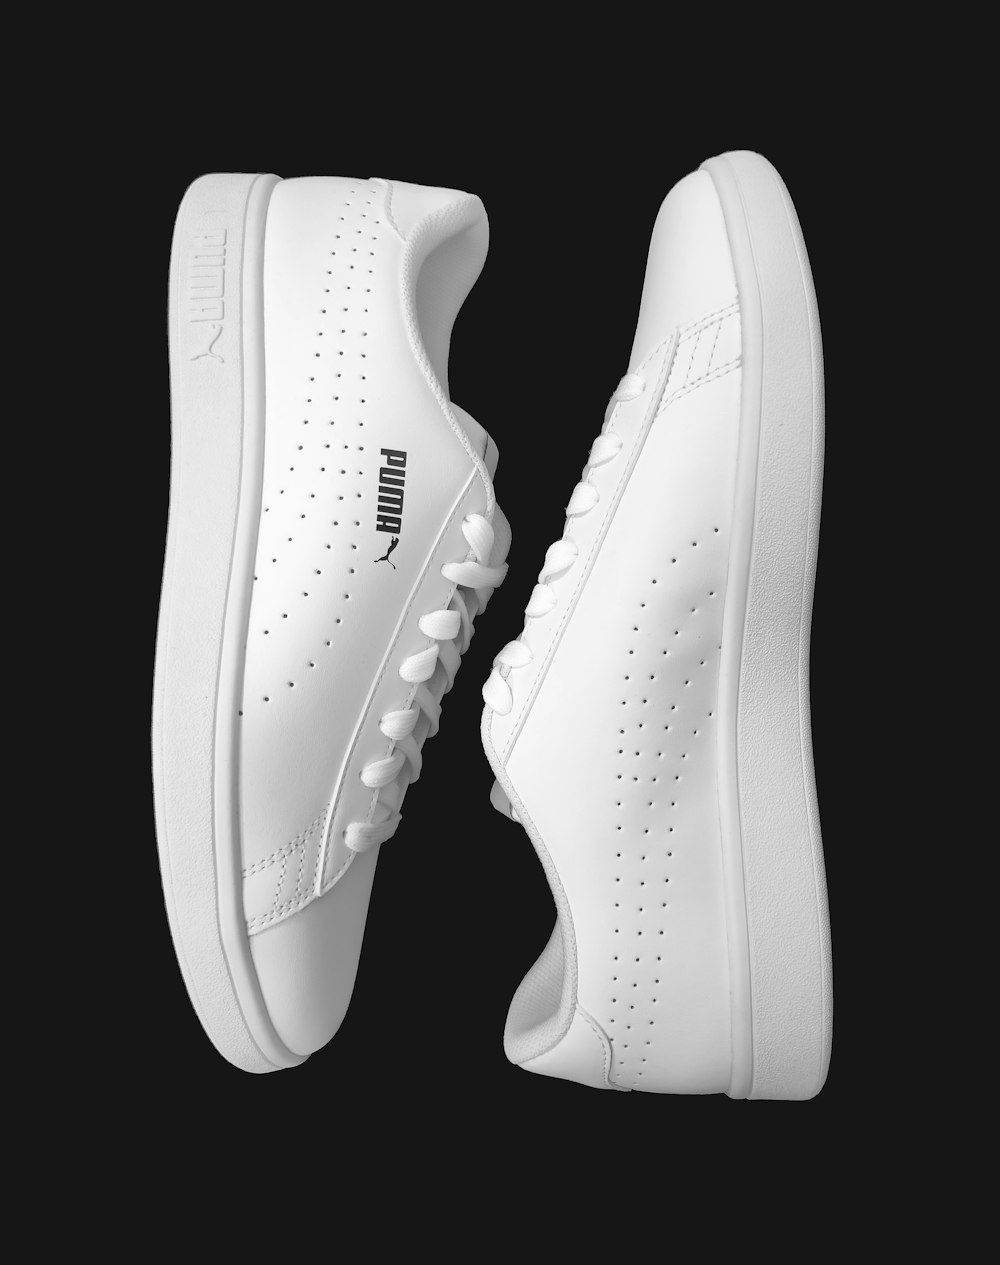 scarpe da ginnastica nike bianche su sfondo bianco